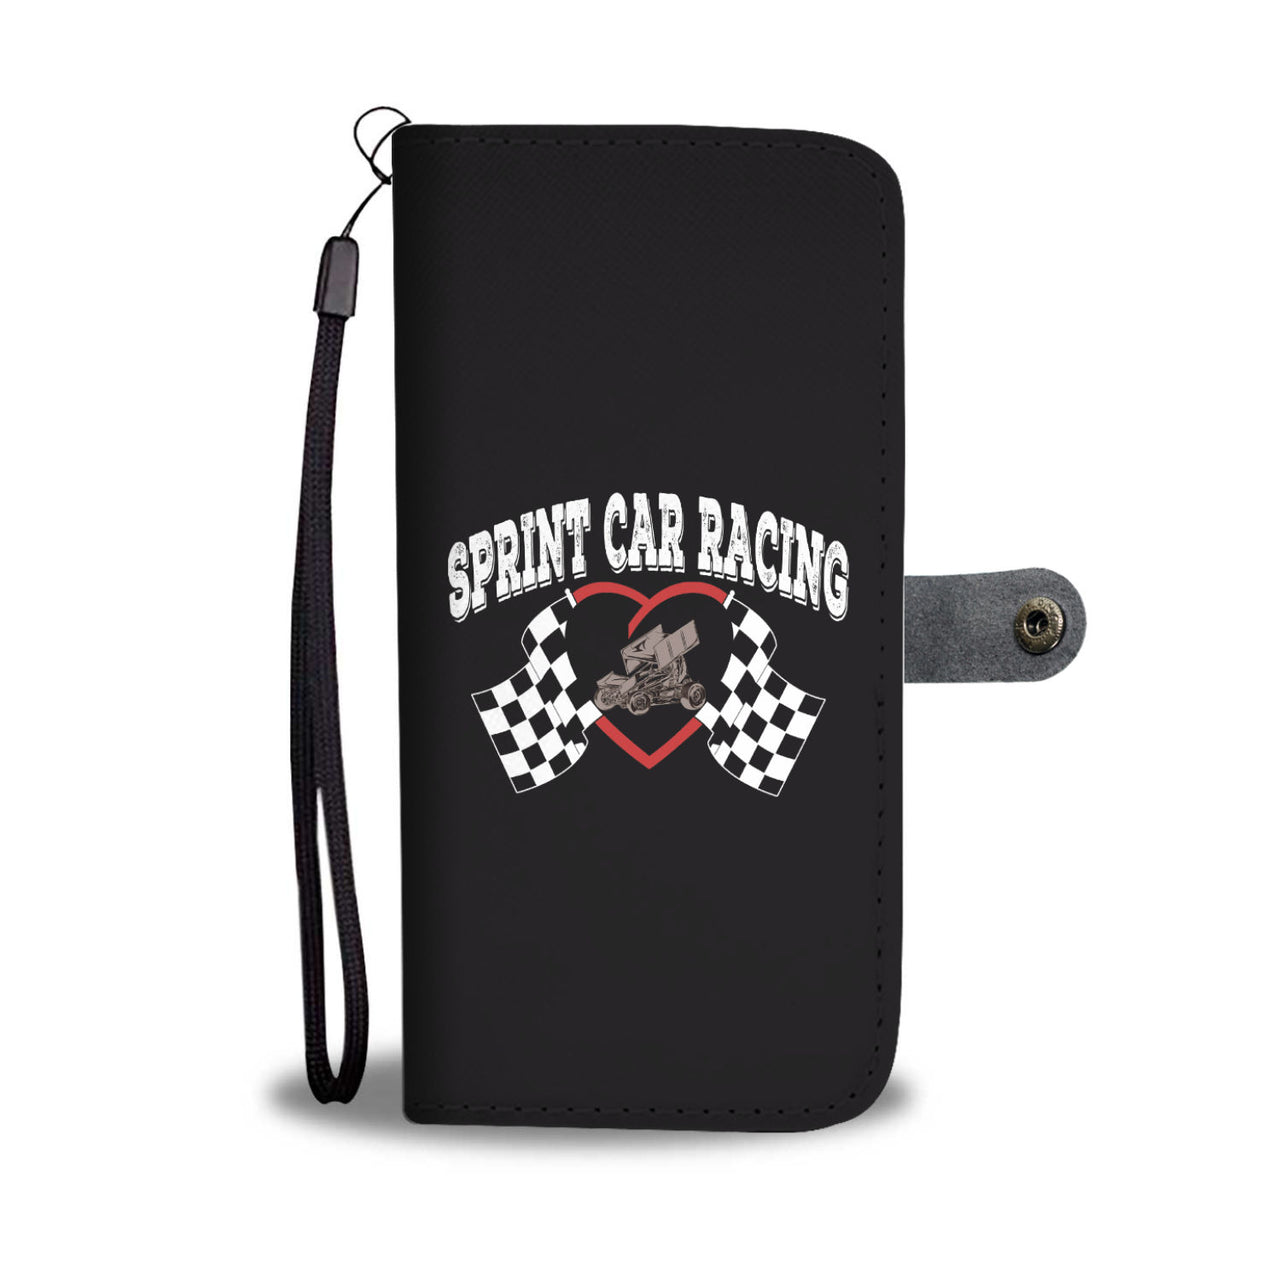 Sprint Car Racing Wallet Case